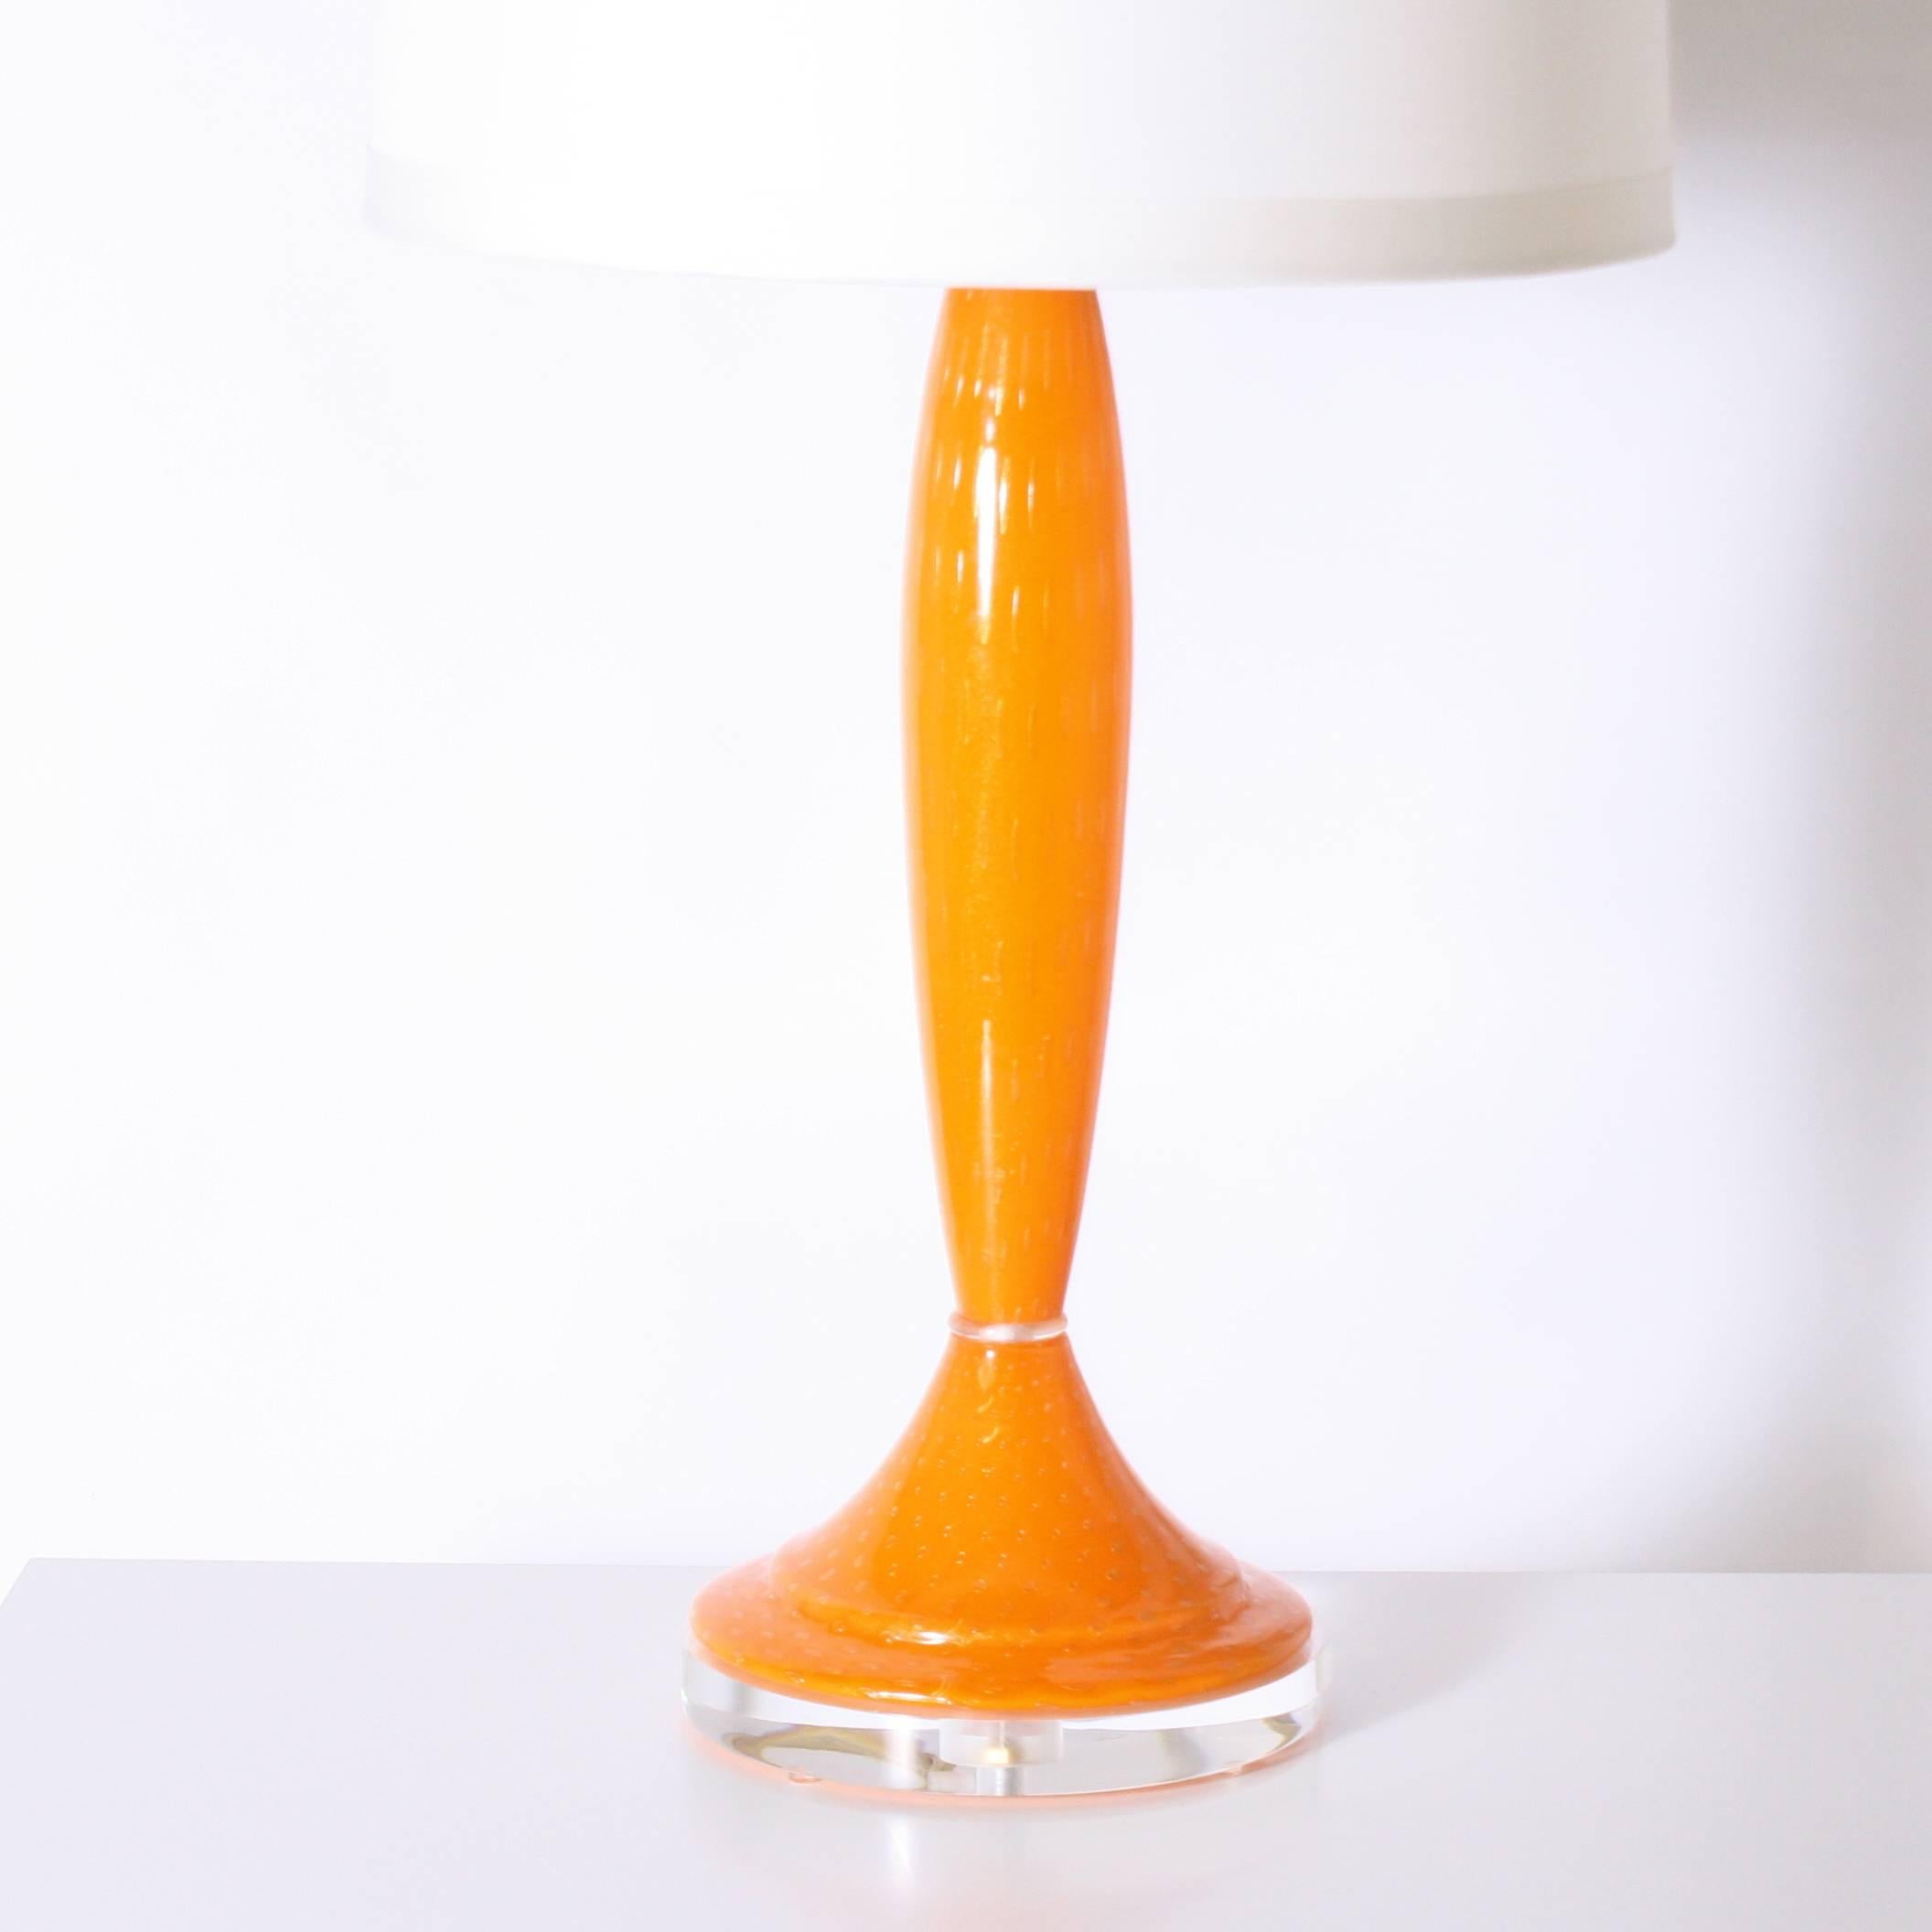 Orange Murano glass lamp with bullicante inclusions

measures: 17